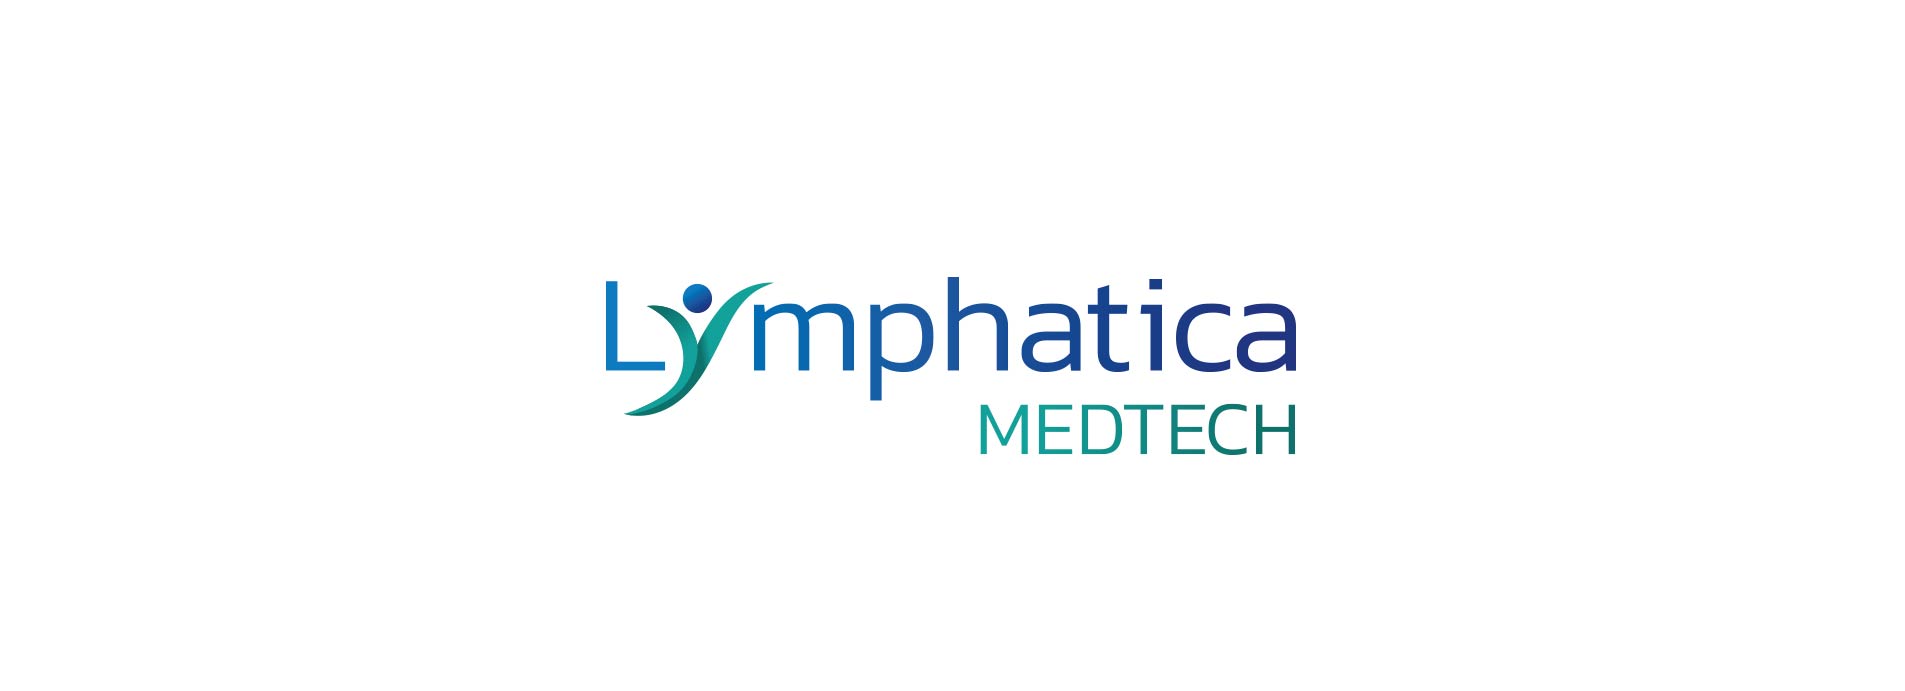 logo aziendale medtech svizzera logo alternativo